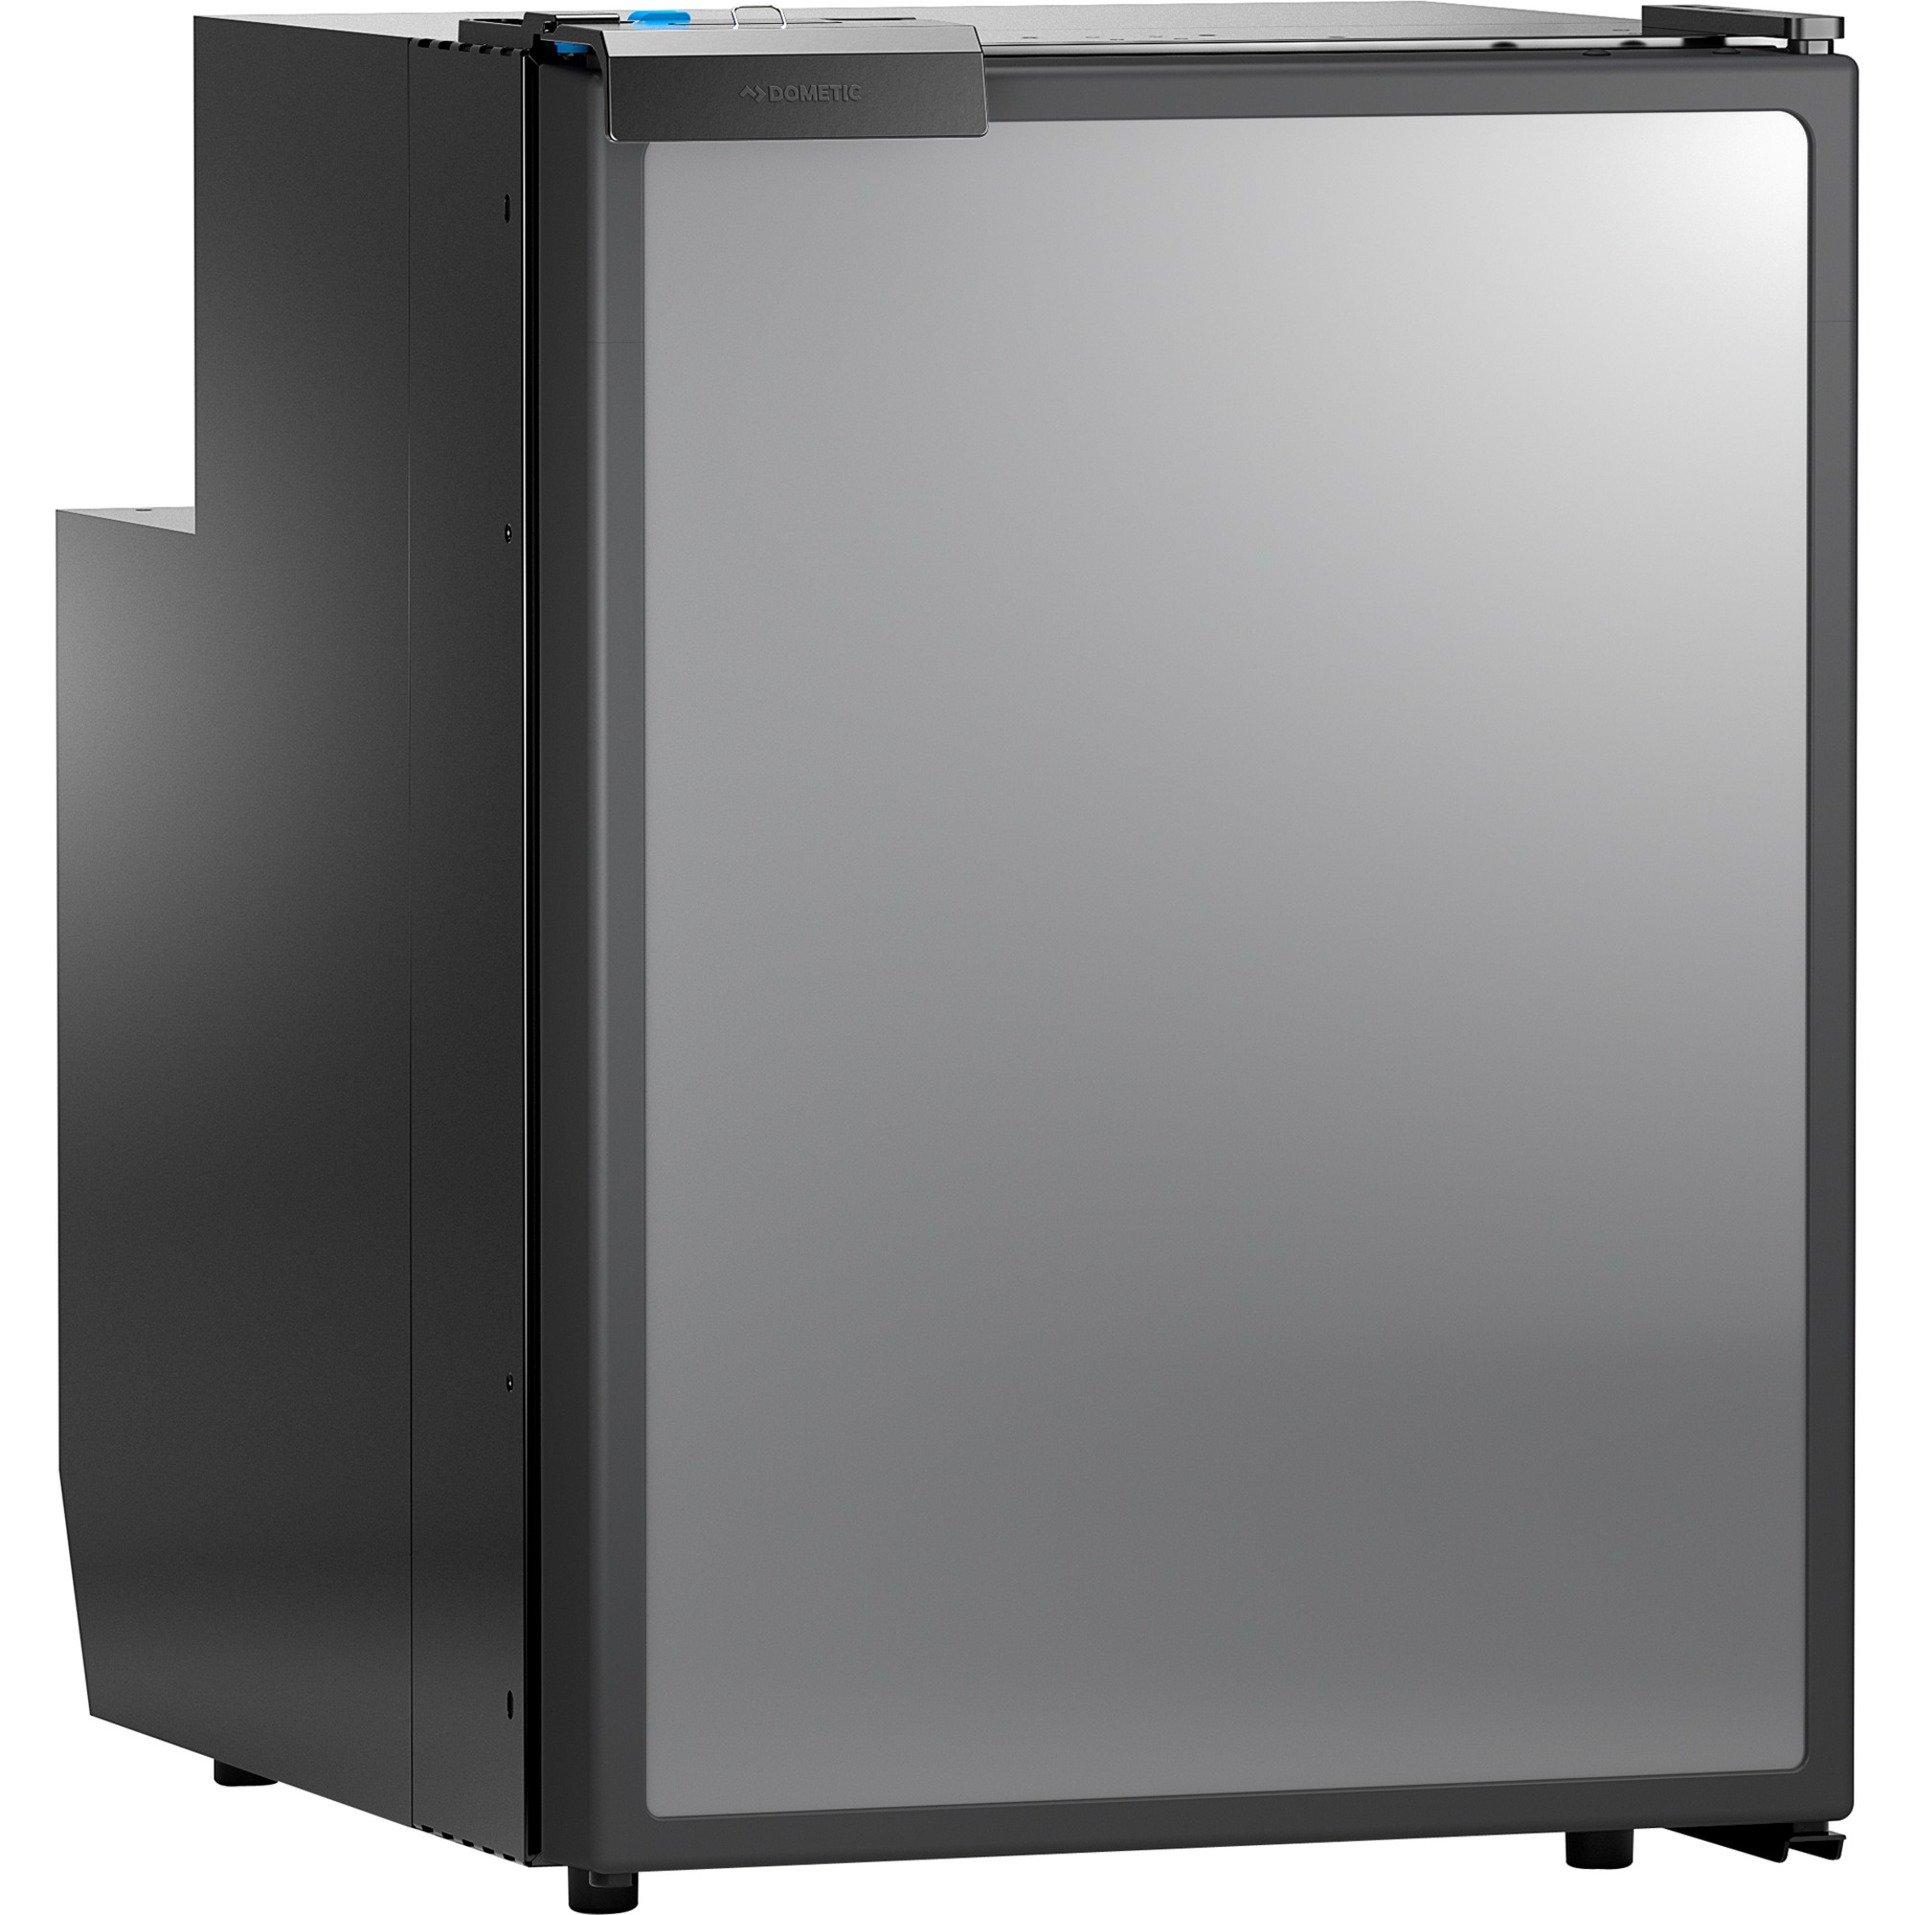 Coolmatic CRE 50, Kühlschrank von Dometic